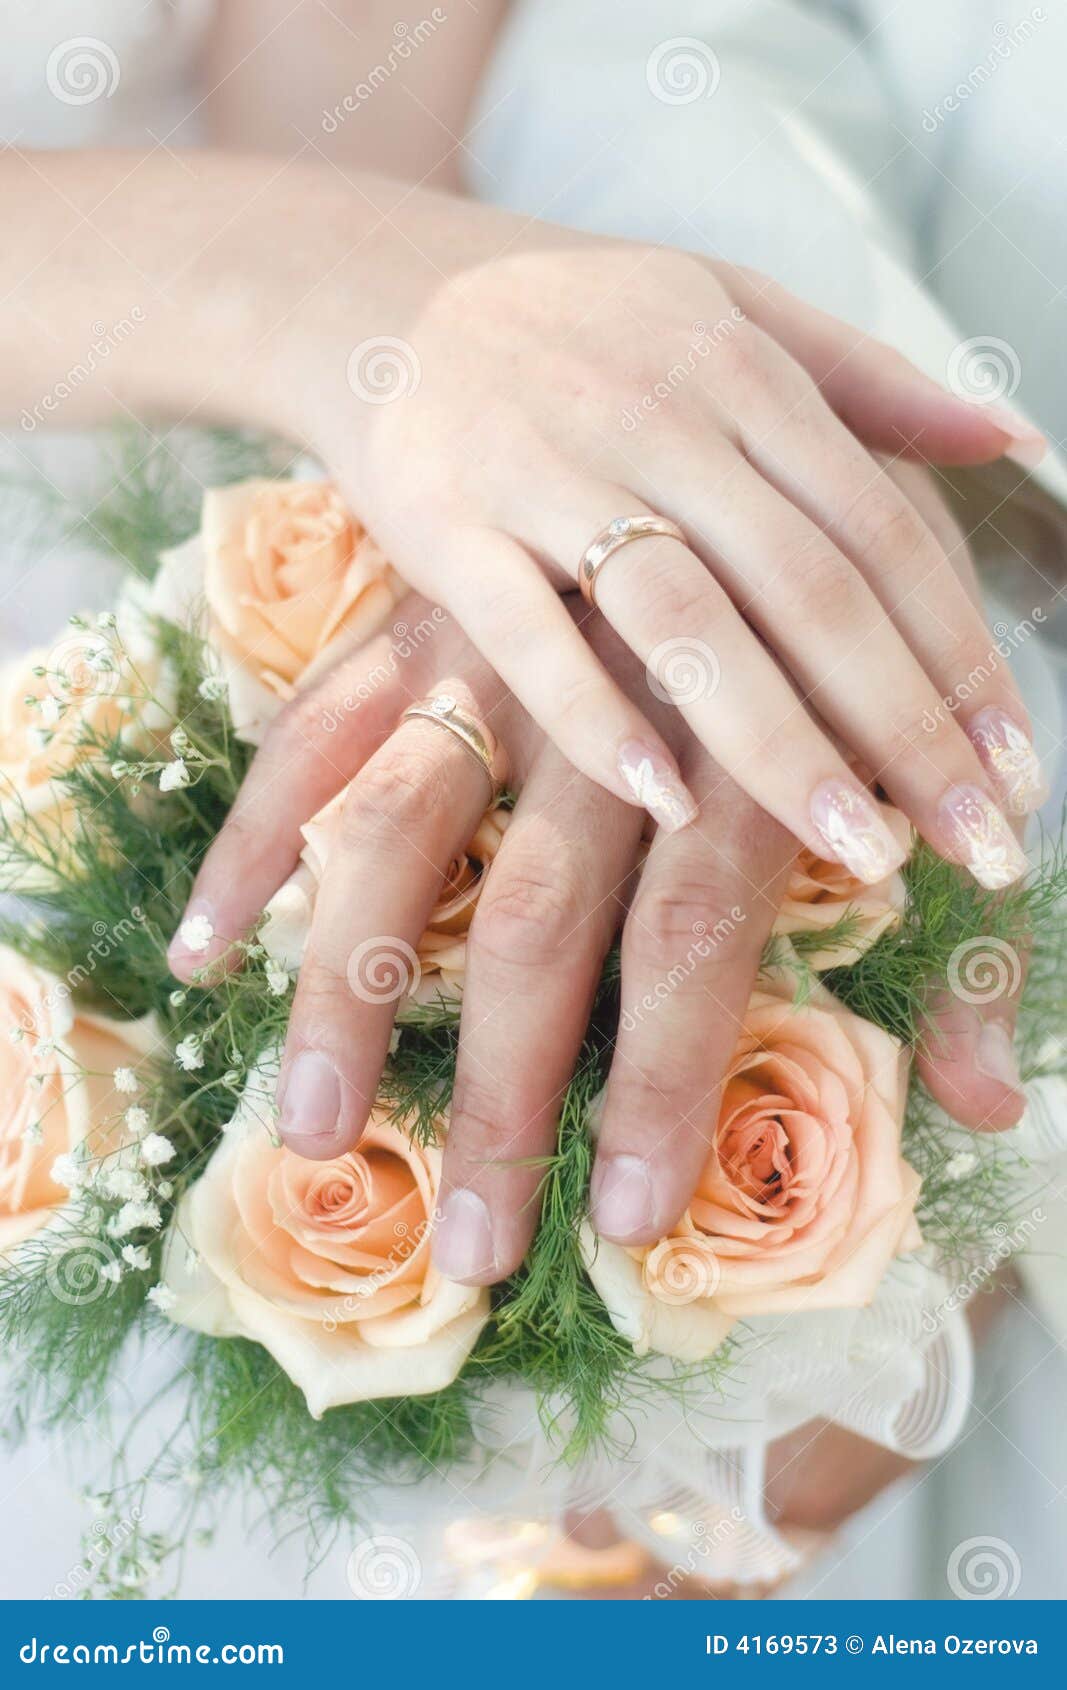 wedding photo of hands rings